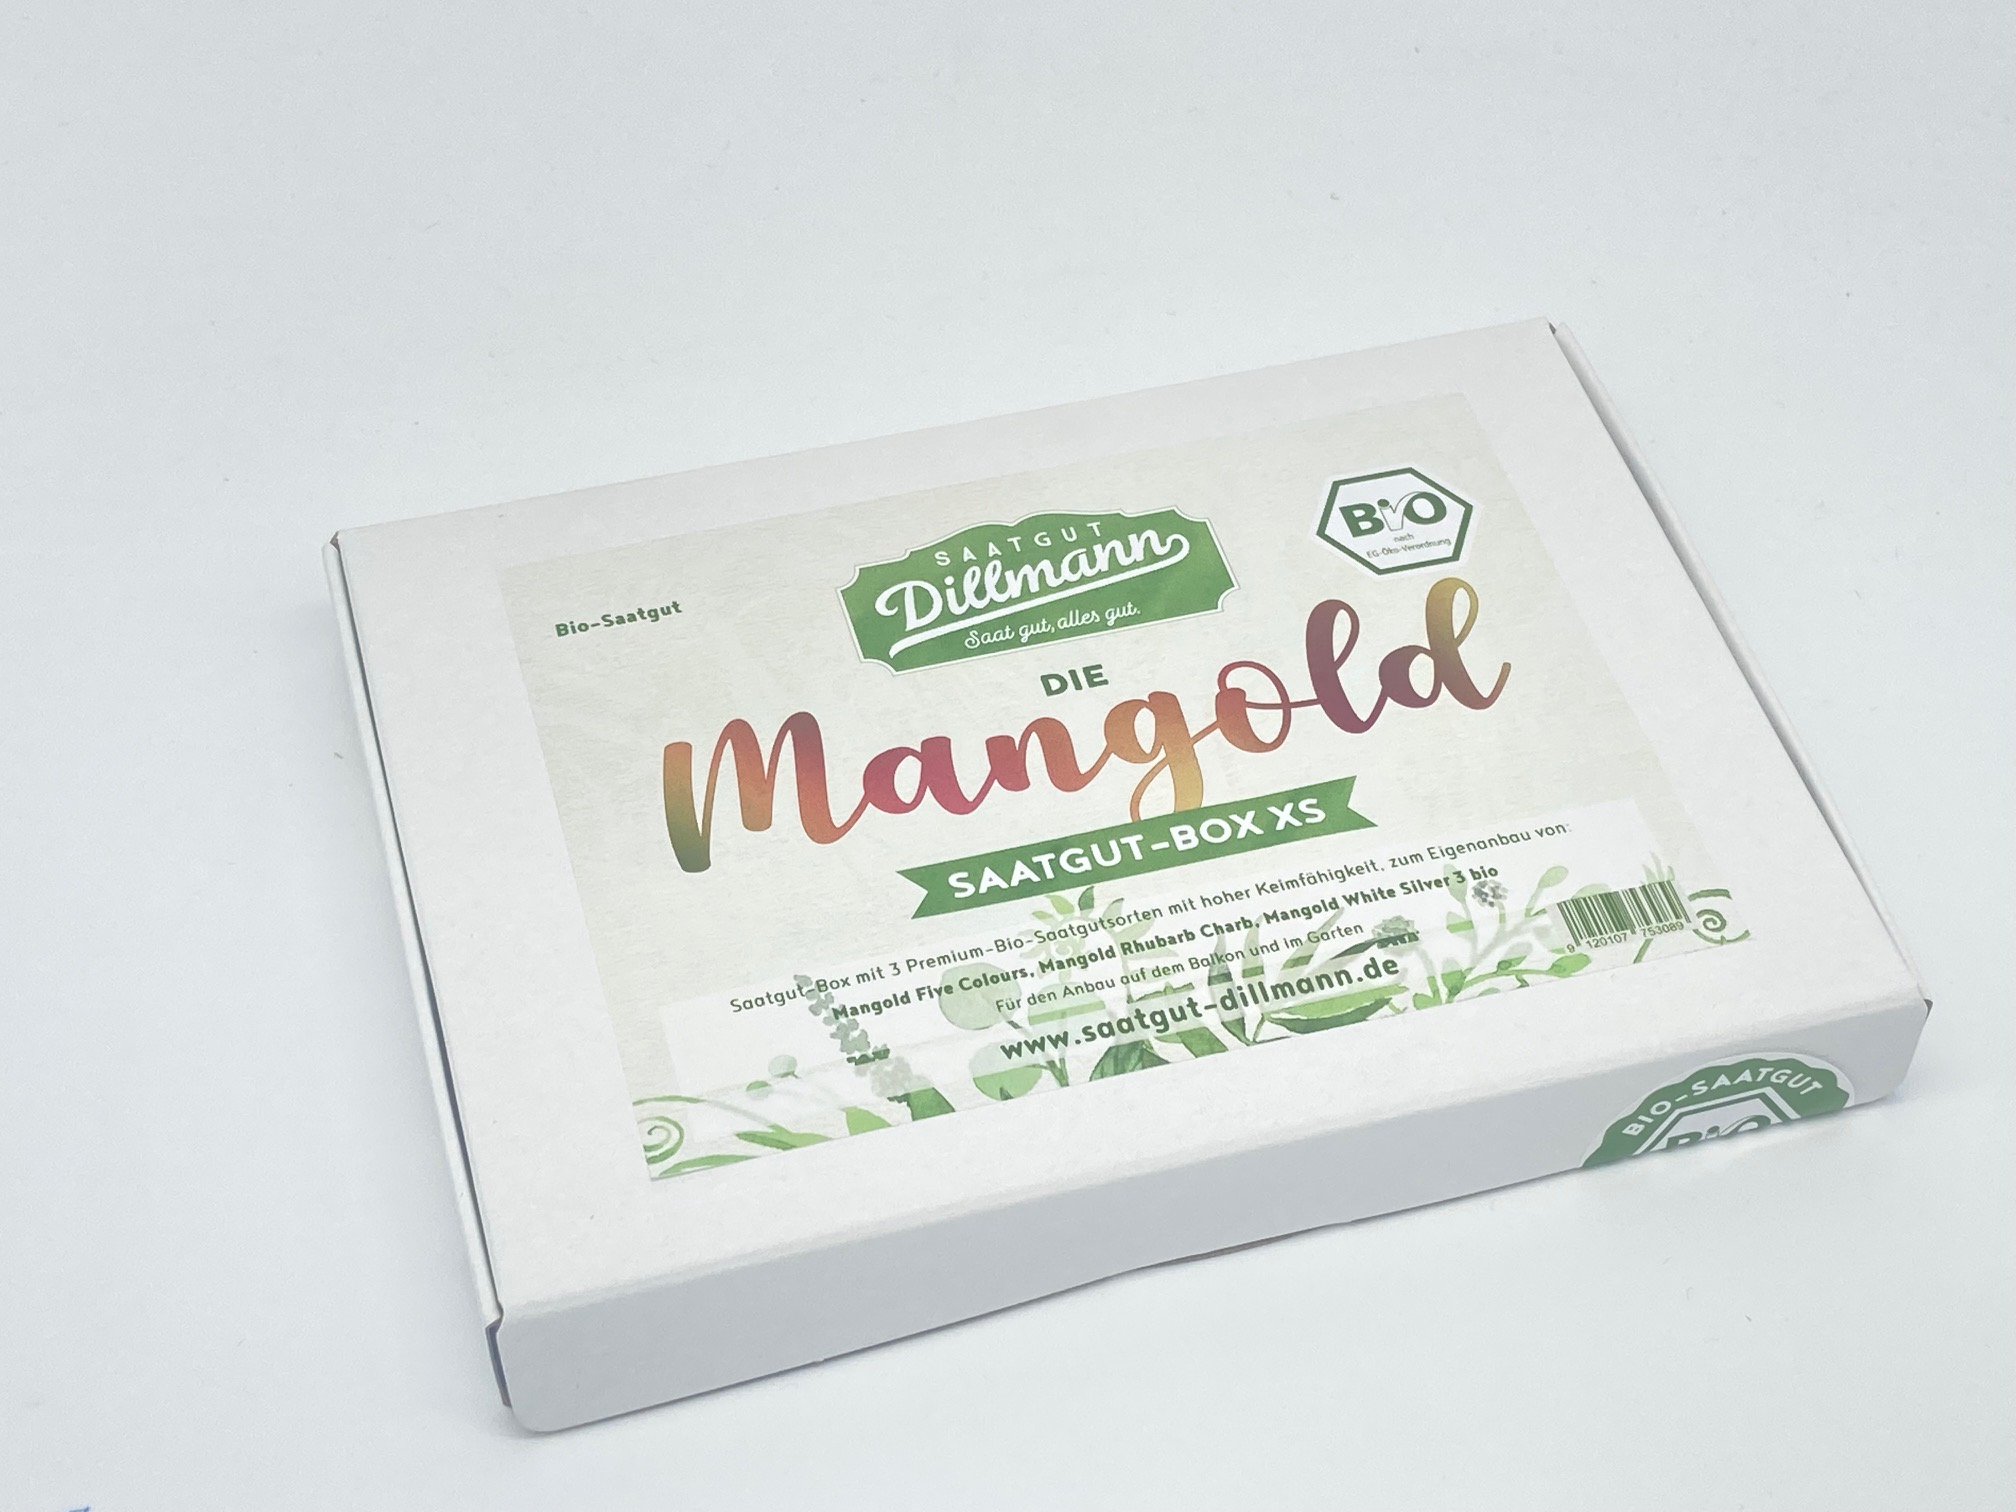 Mangold Saatgut-Box XS Bio (Karton)